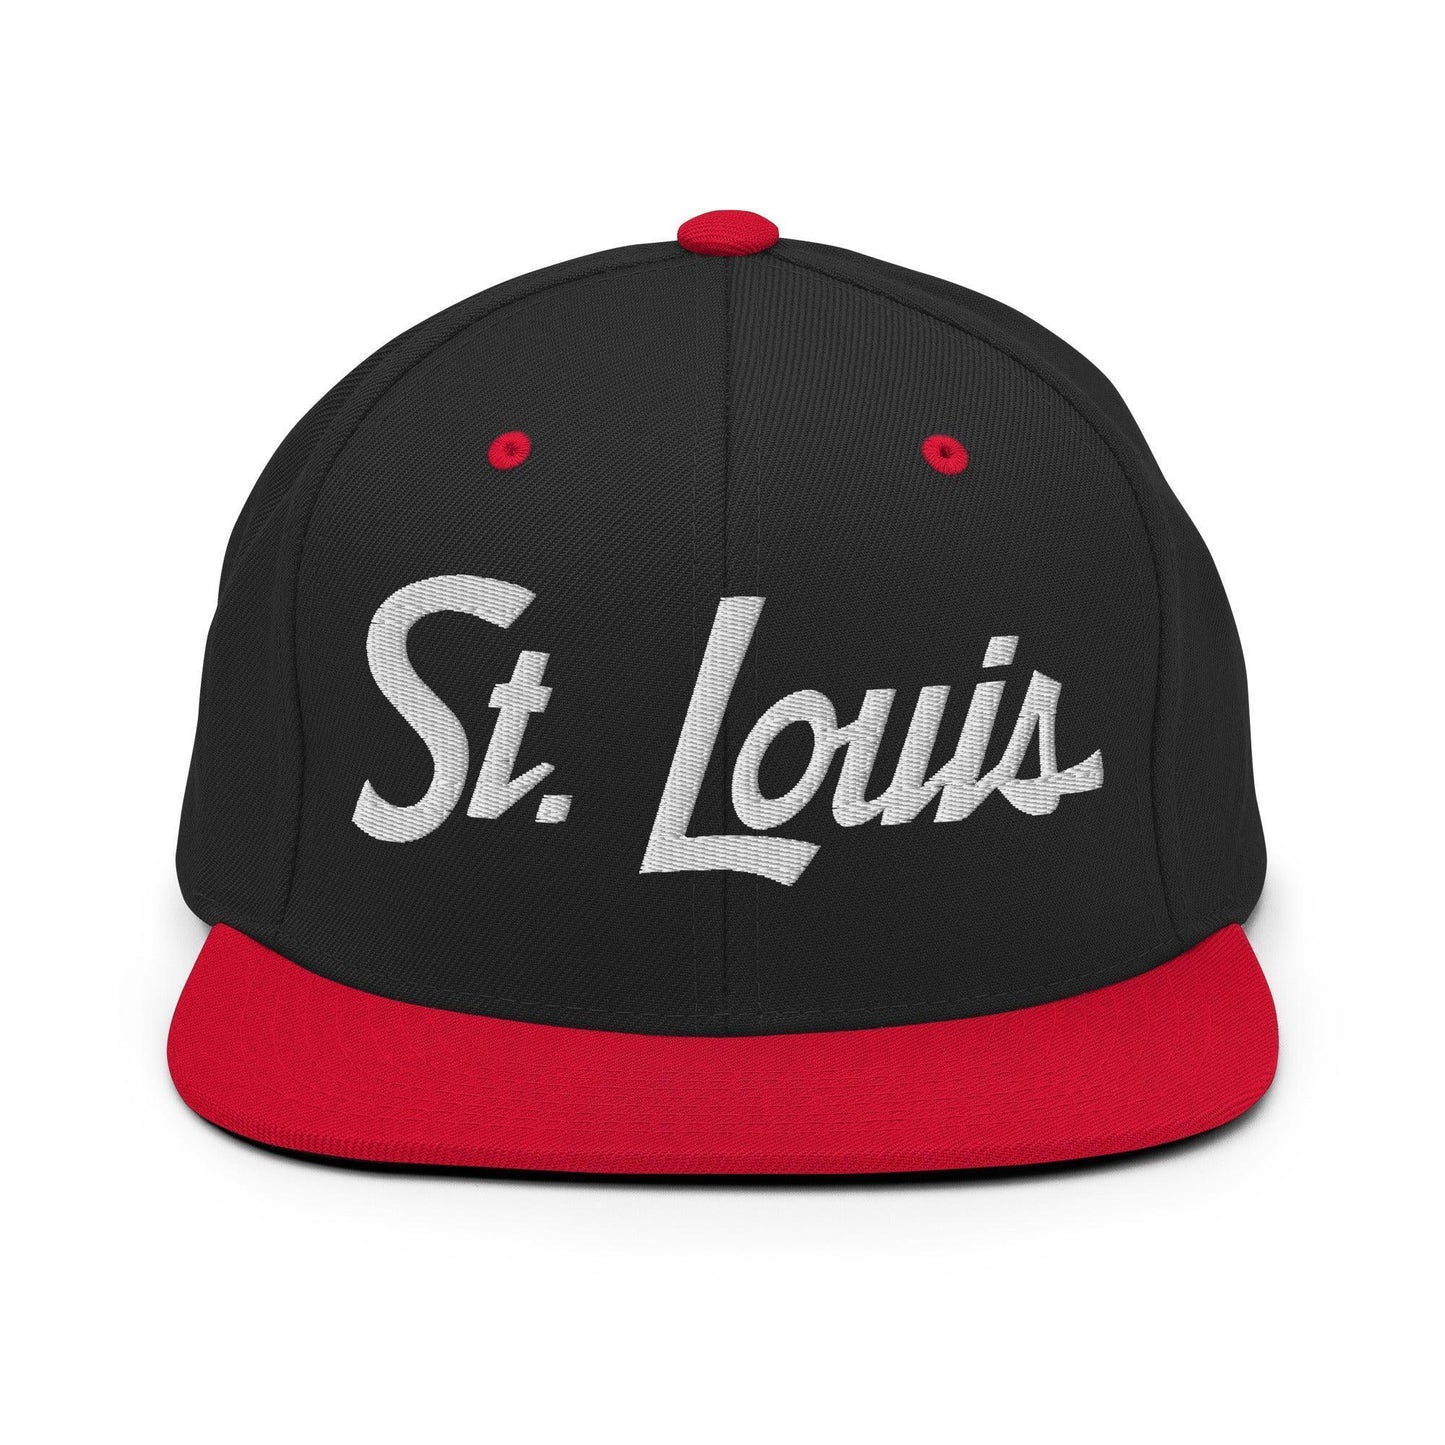 St. Louis Script Snapback Hat Black Red